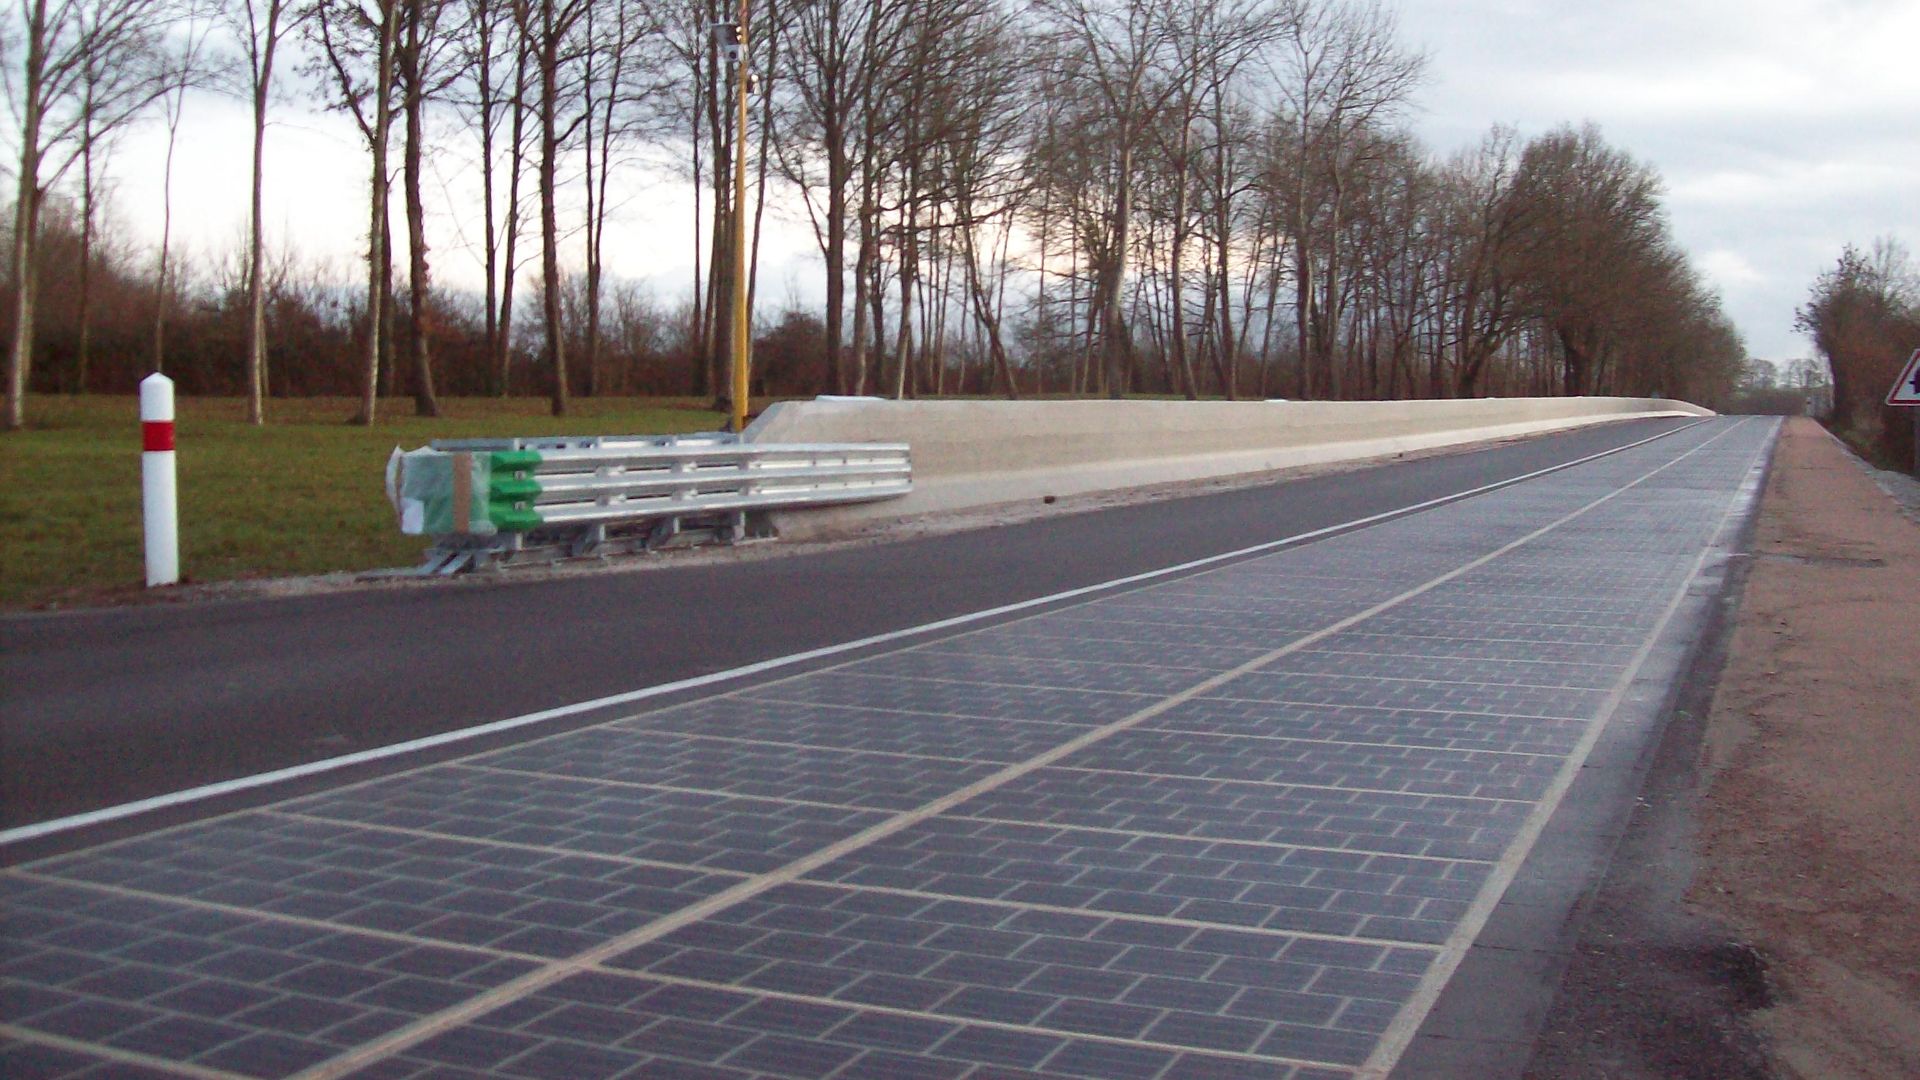 French solar road a failure